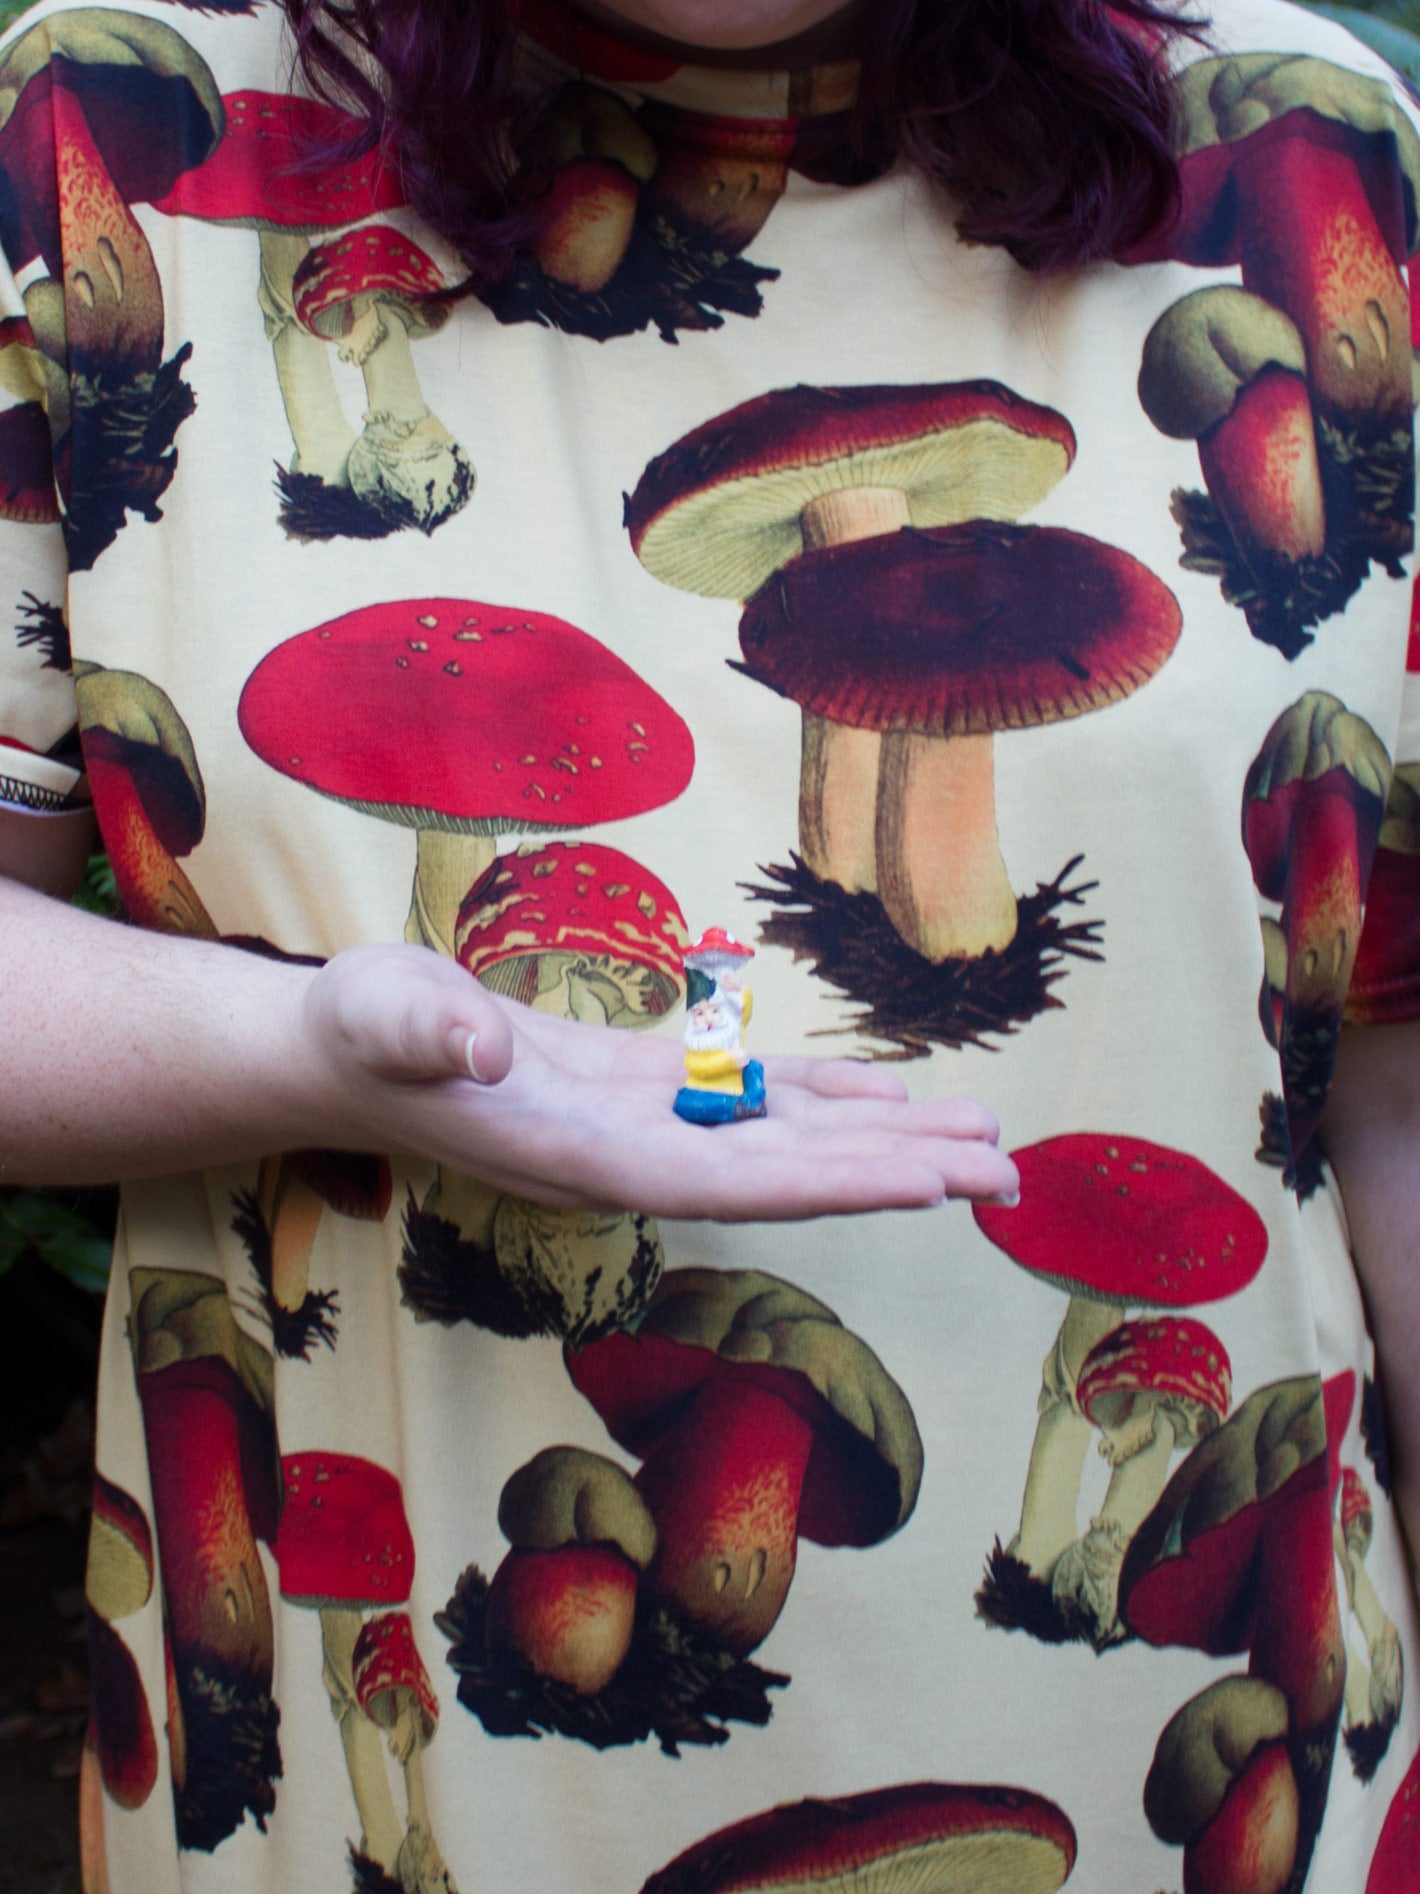 Retro mushroom t-shirt dress.